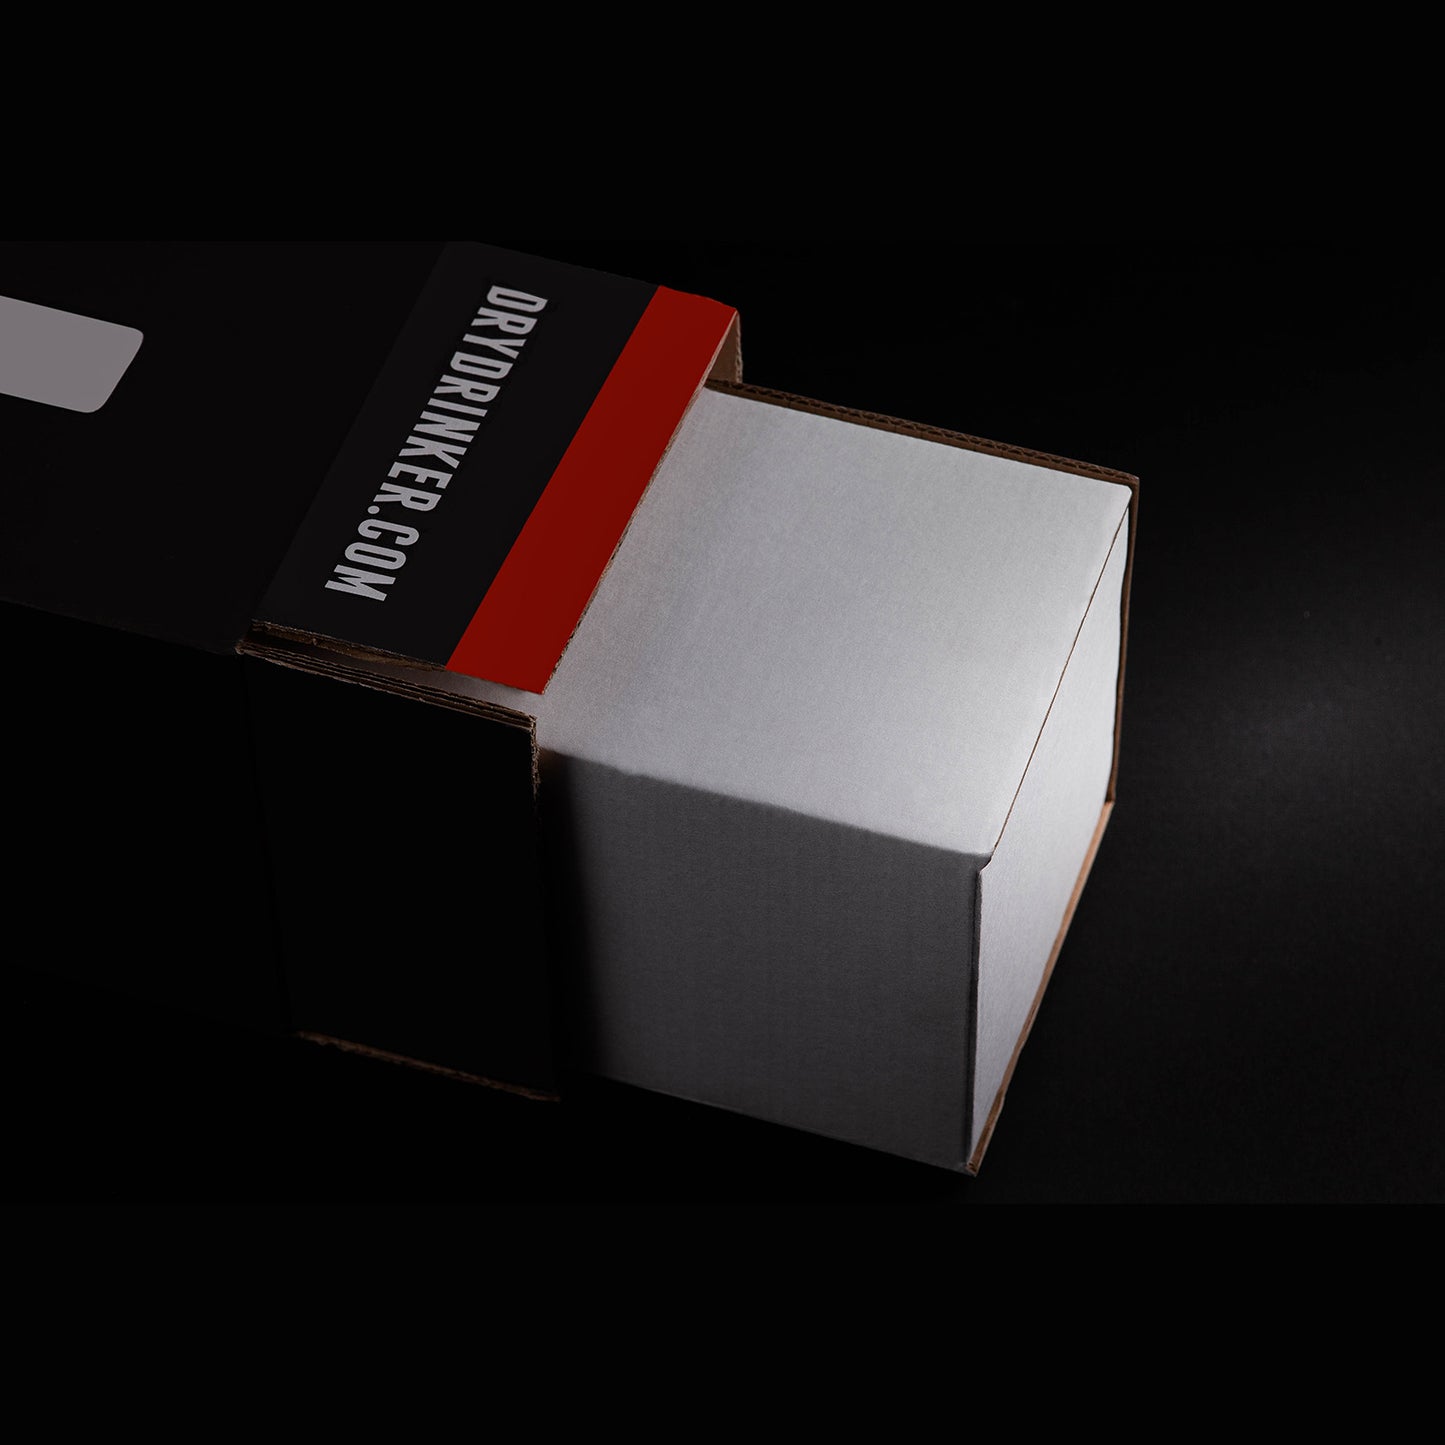 Oddbird Blanc de Blancs - Alcohol Free Sparkling Wine - includes Premium Gift Box